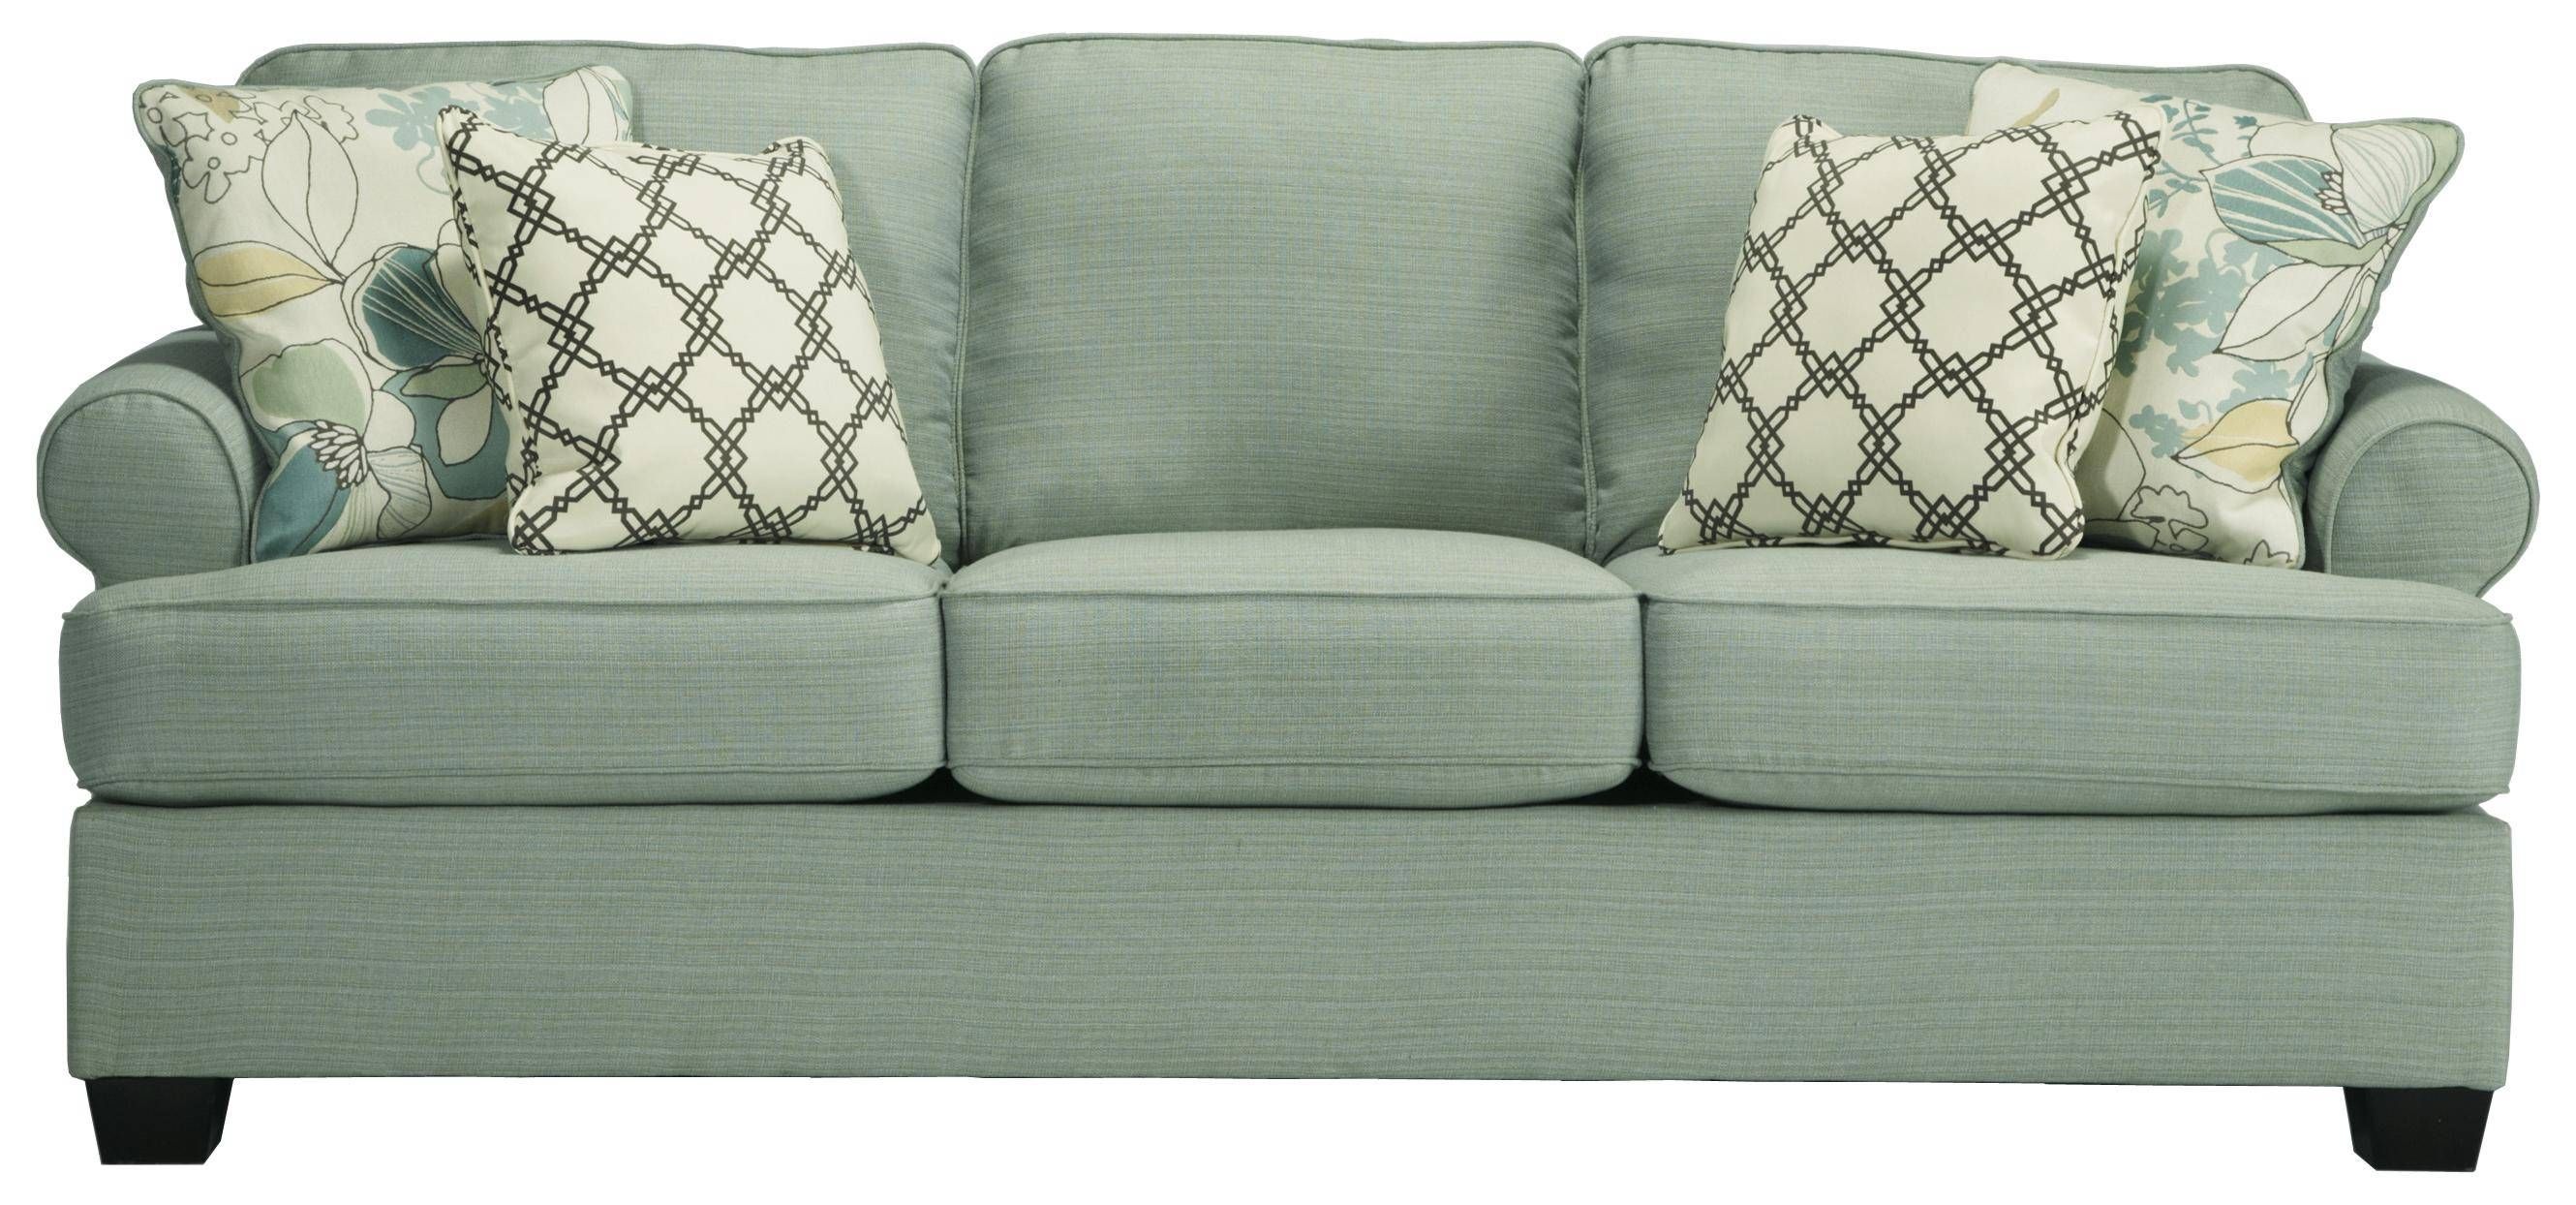 Signature Designashley Daystar – Seafoam Contemporary Sofa Pertaining To Seafoam Green Couches (View 12 of 15)